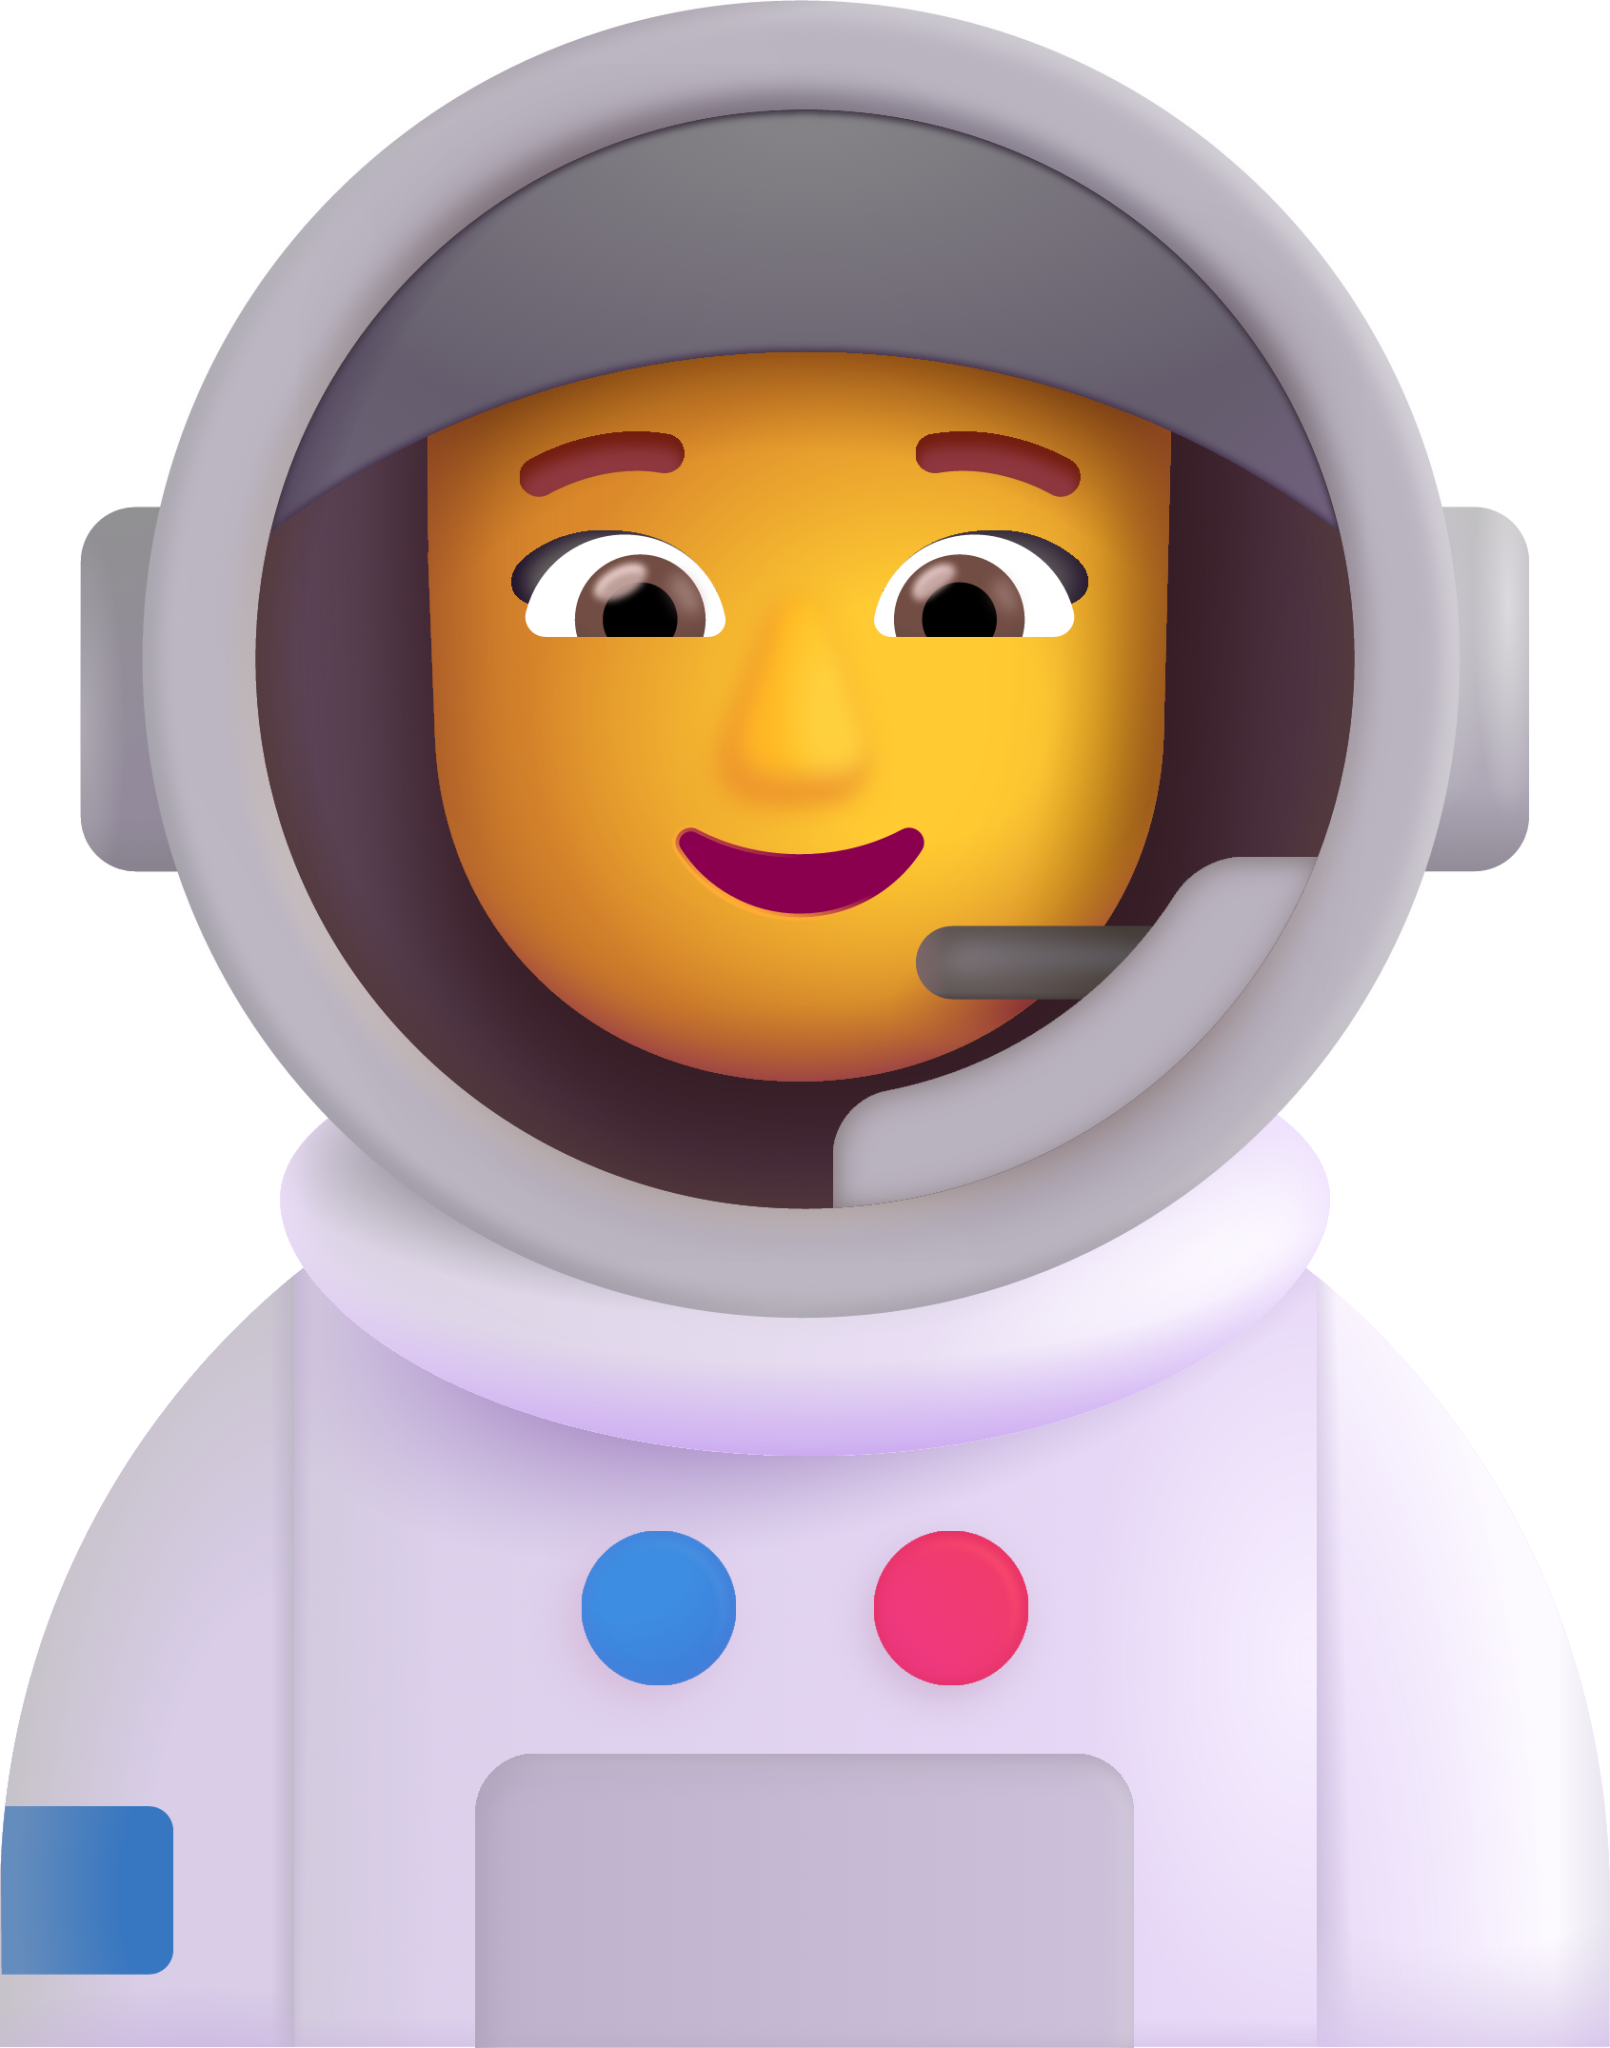 woman astronaut default emoji